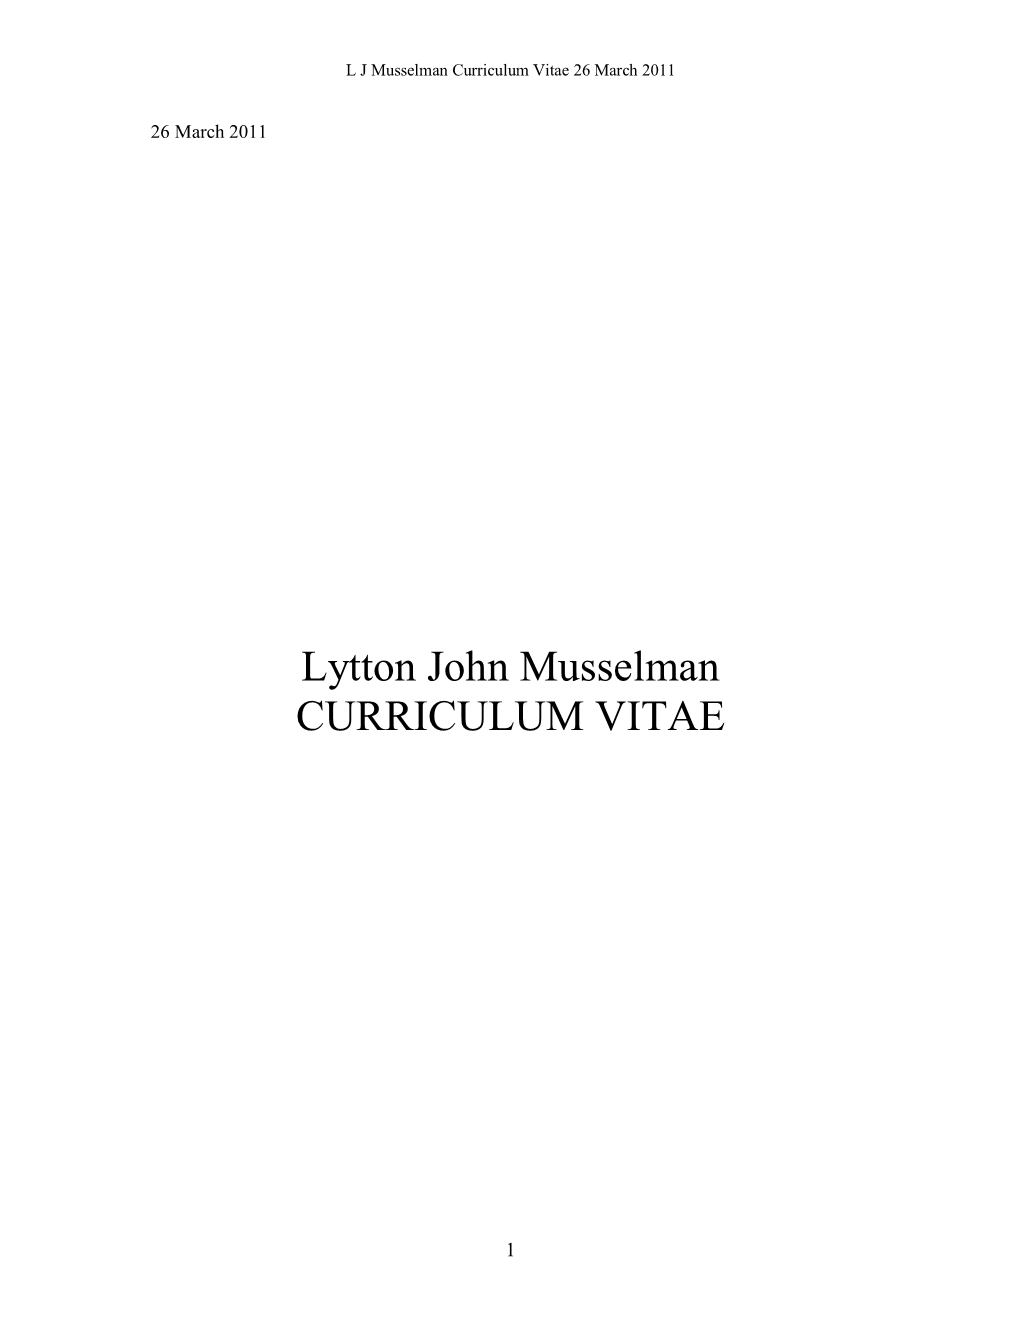 Lytton John Musselman CURRICULUM VITAE